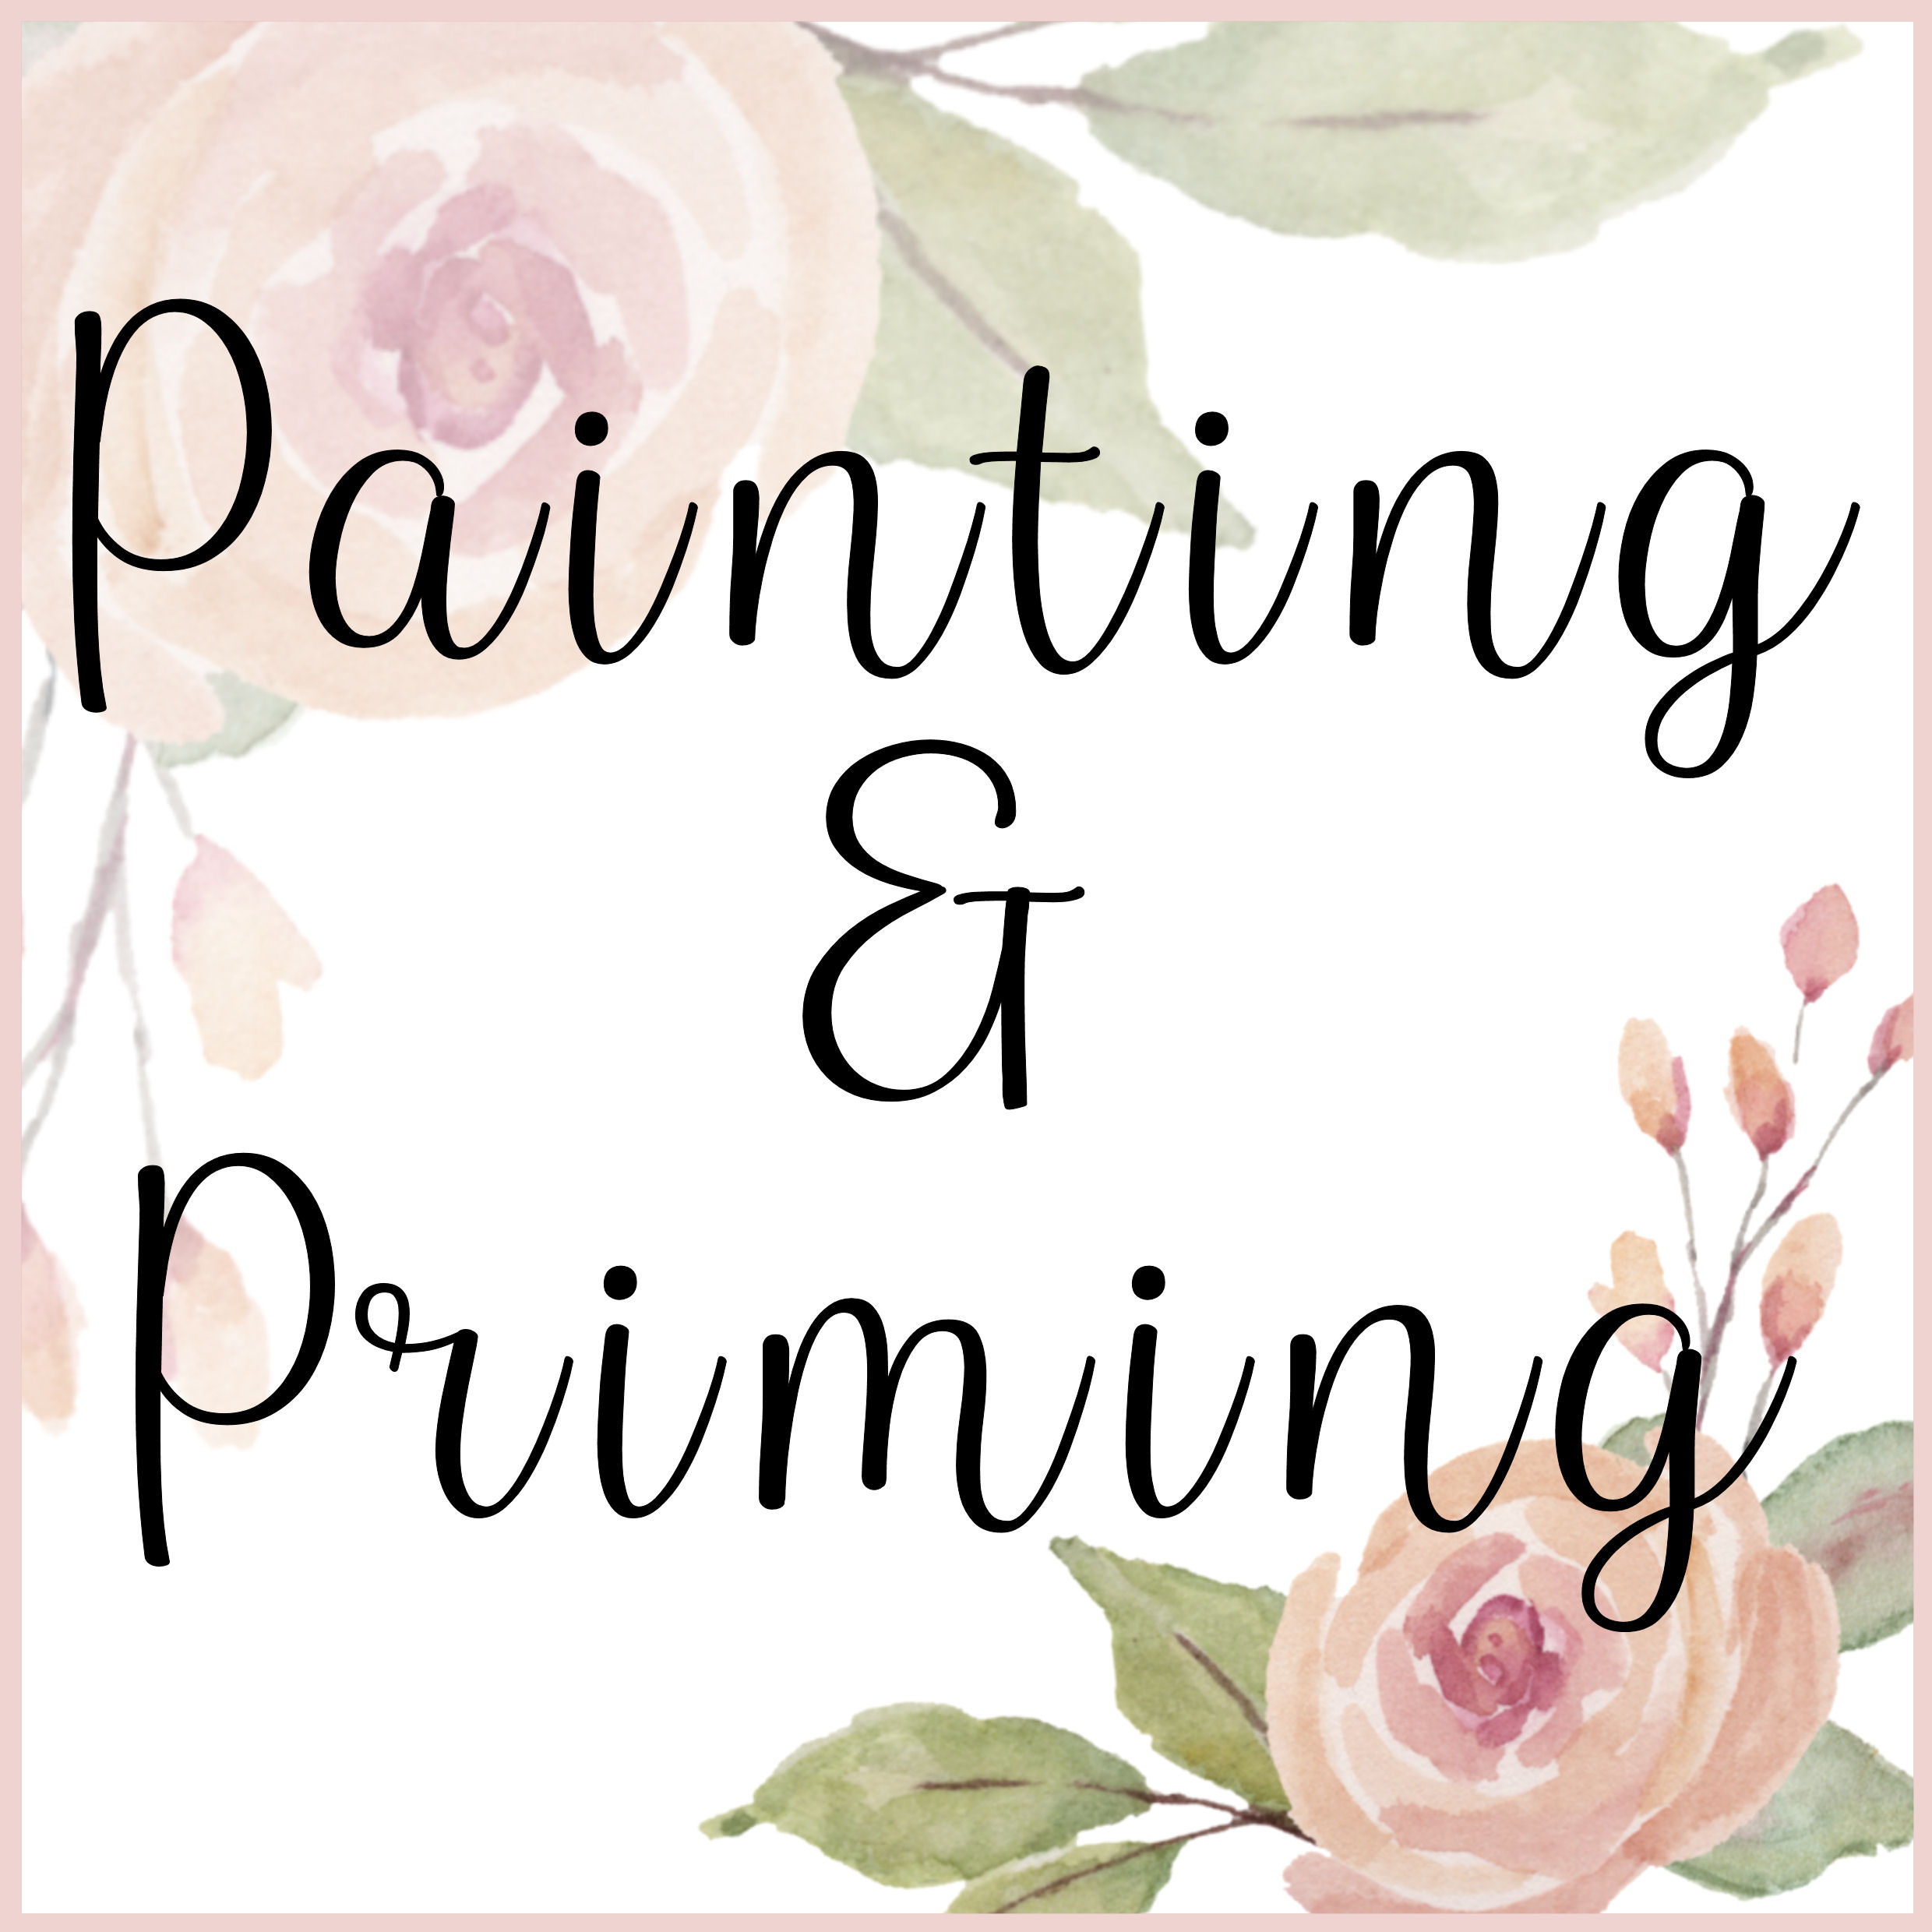 Painting/Priming